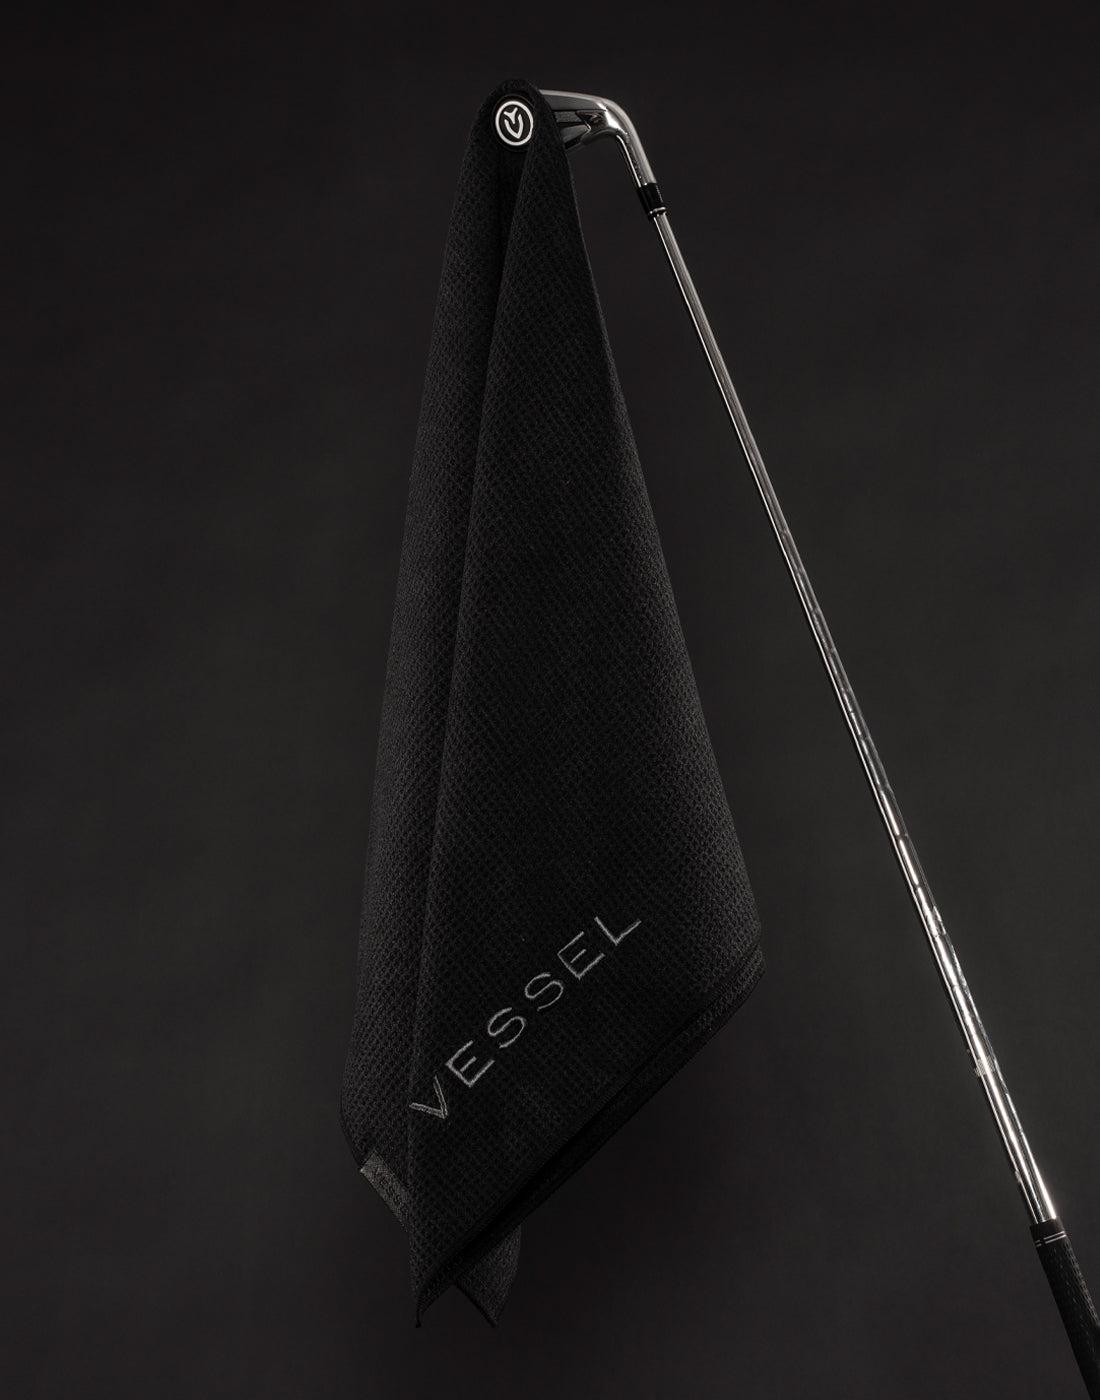 A black golf towel hangs from a silver golf club in a black studio